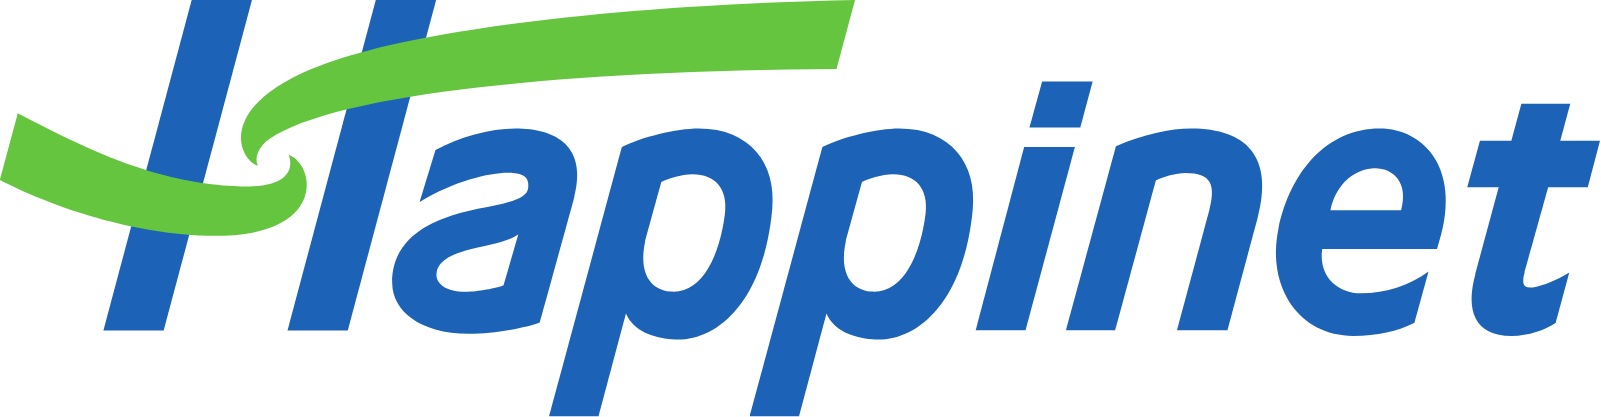 Happinet logo large (transparent PNG)